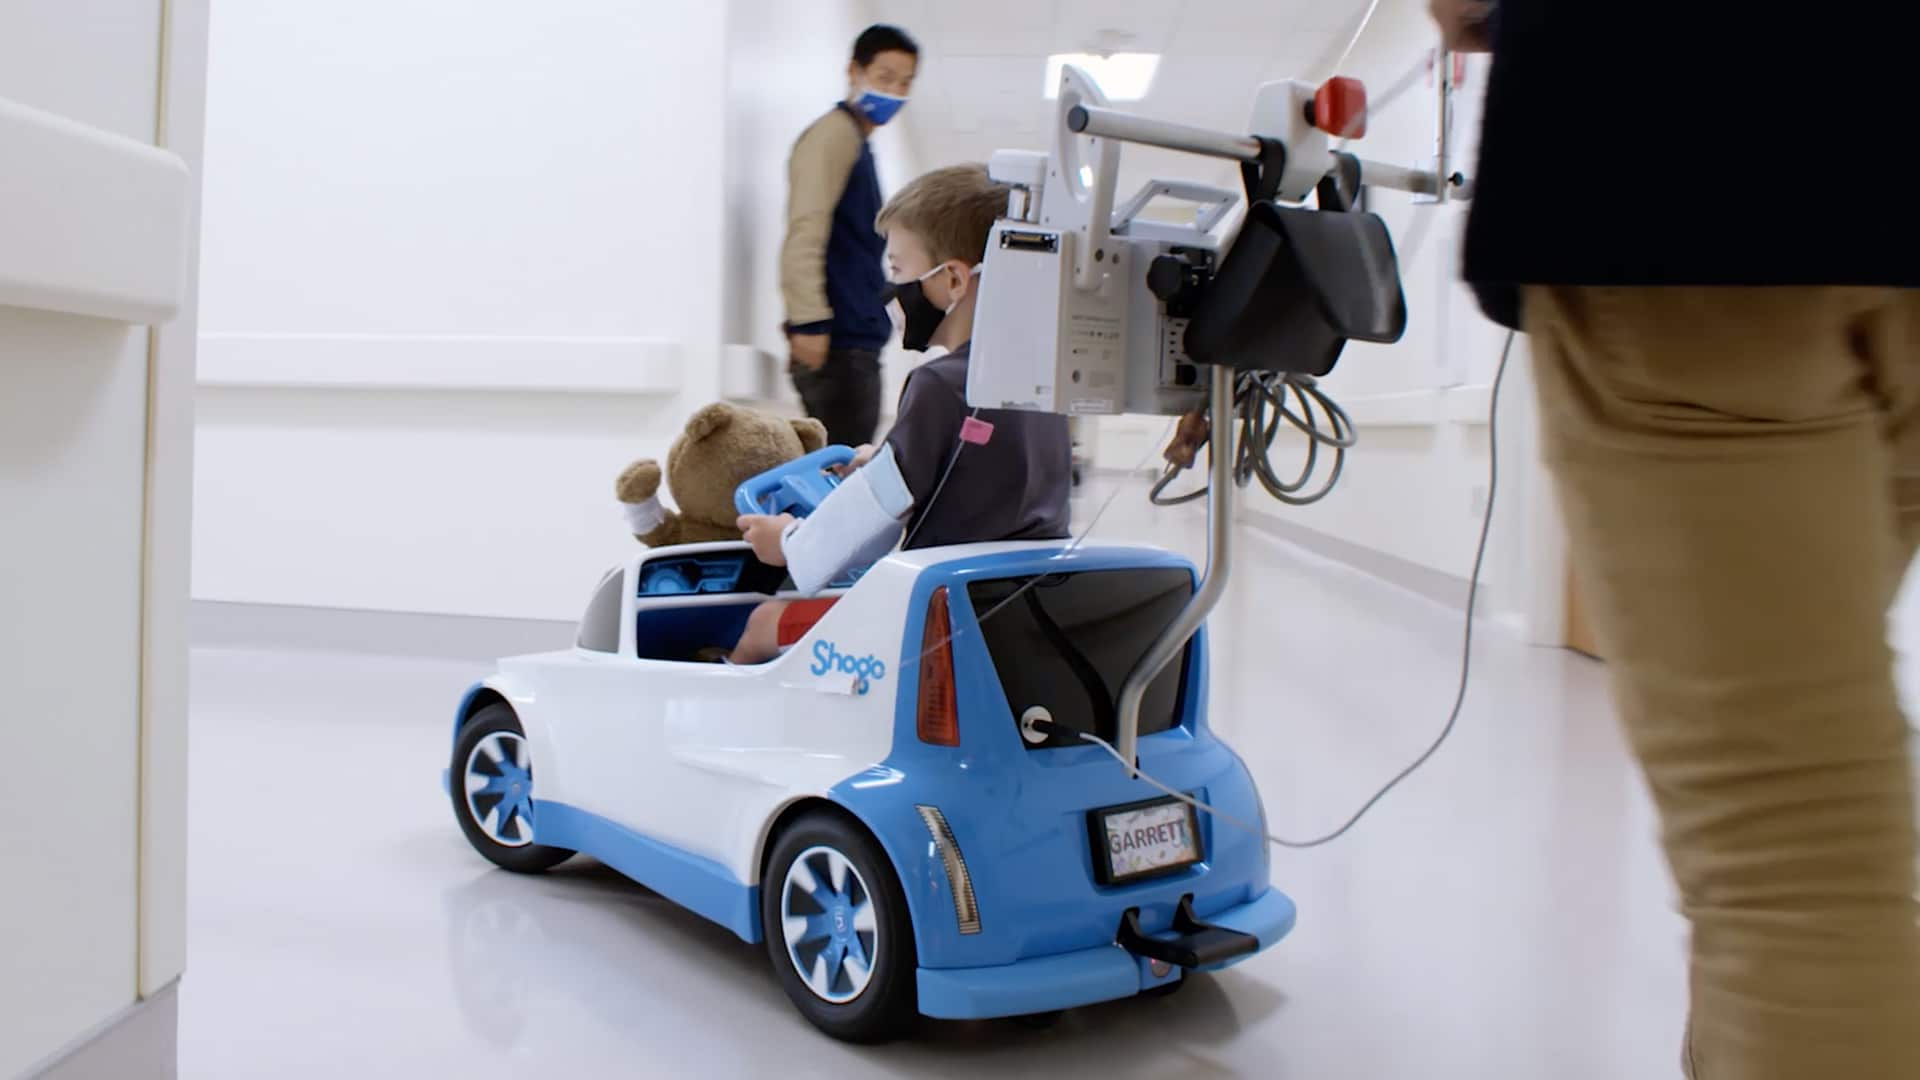 Honda’s “Shogo” Vehicle Brings Joy to Hospitalized Children